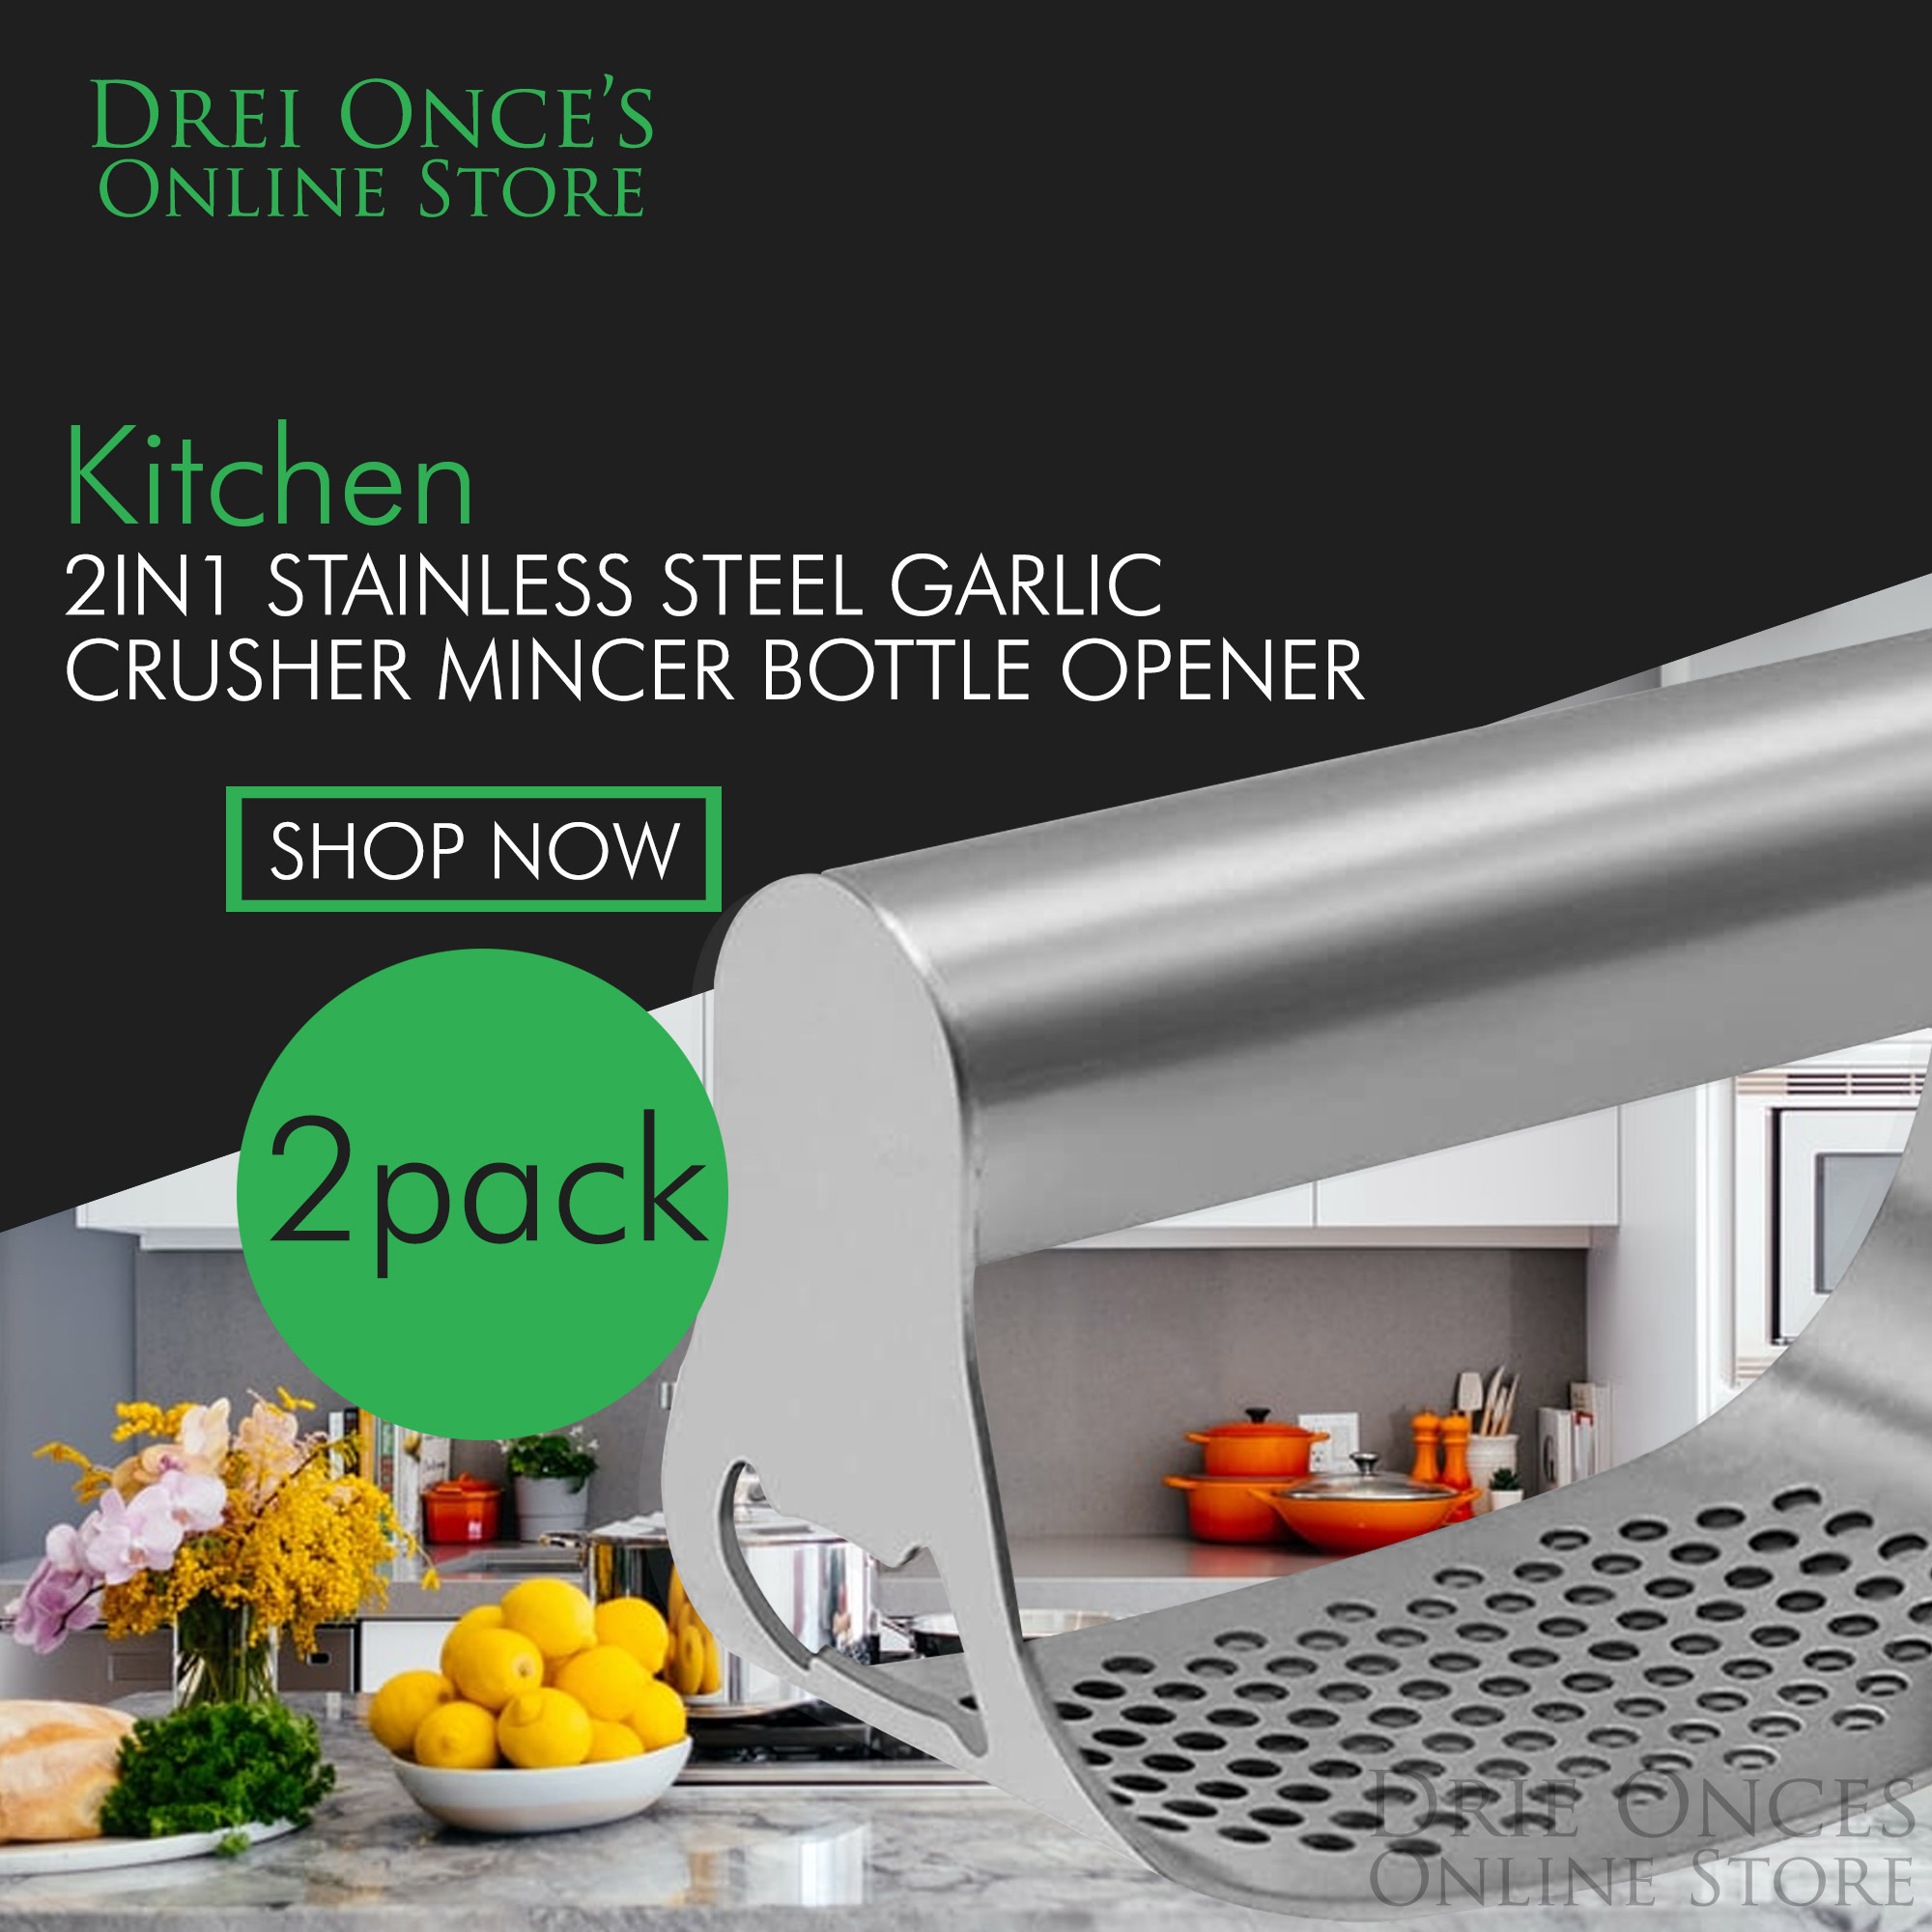 Dishwasher Safe Garlic Rocker Crusher Mincer Press with Bottle Opener Stainless Steel